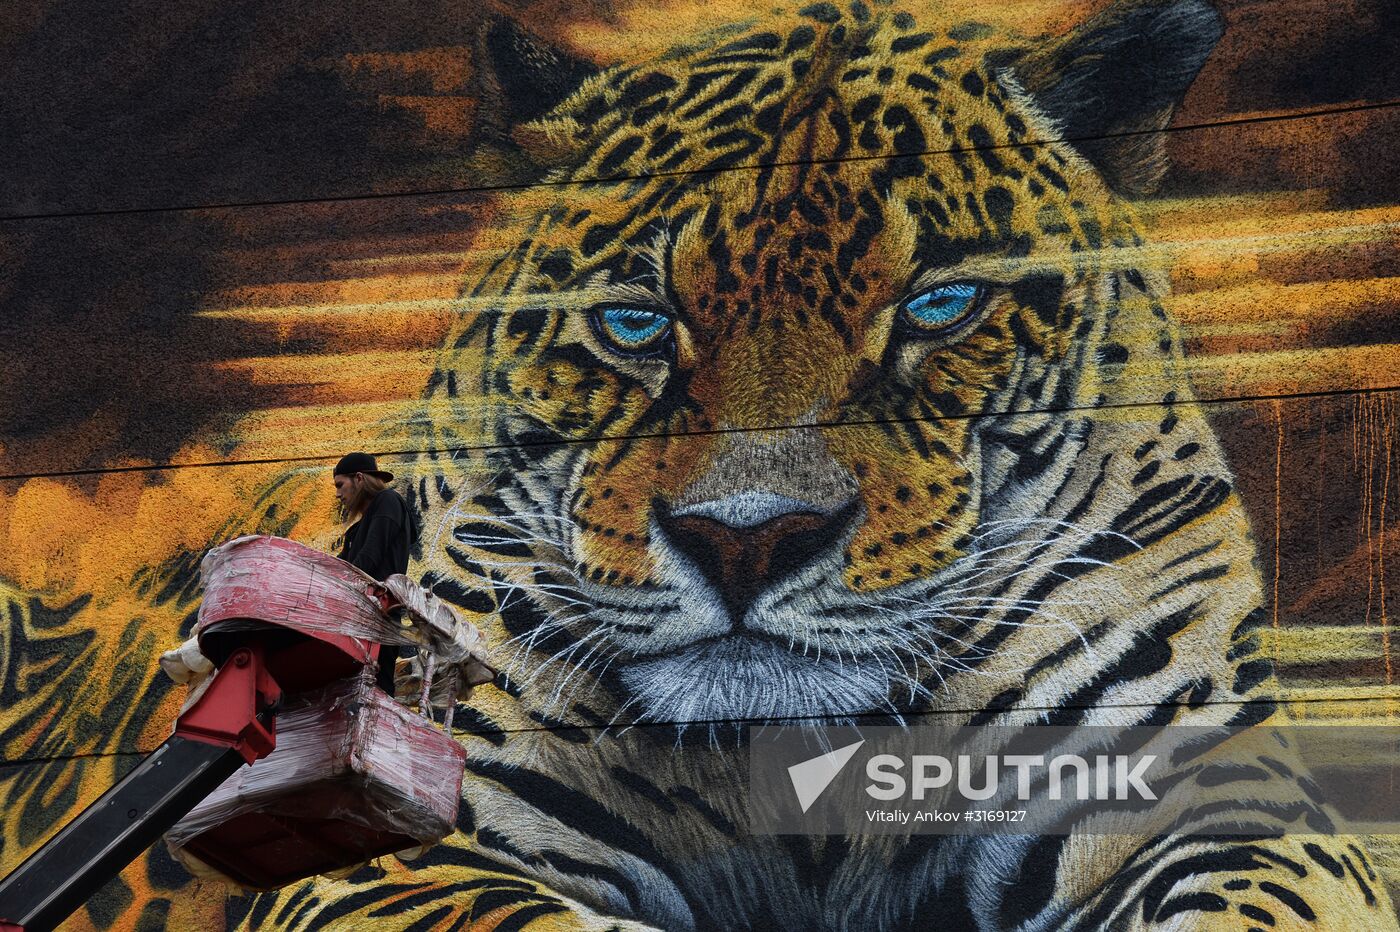 Graffiti featuring Far Eastern leopard in Vladivostok